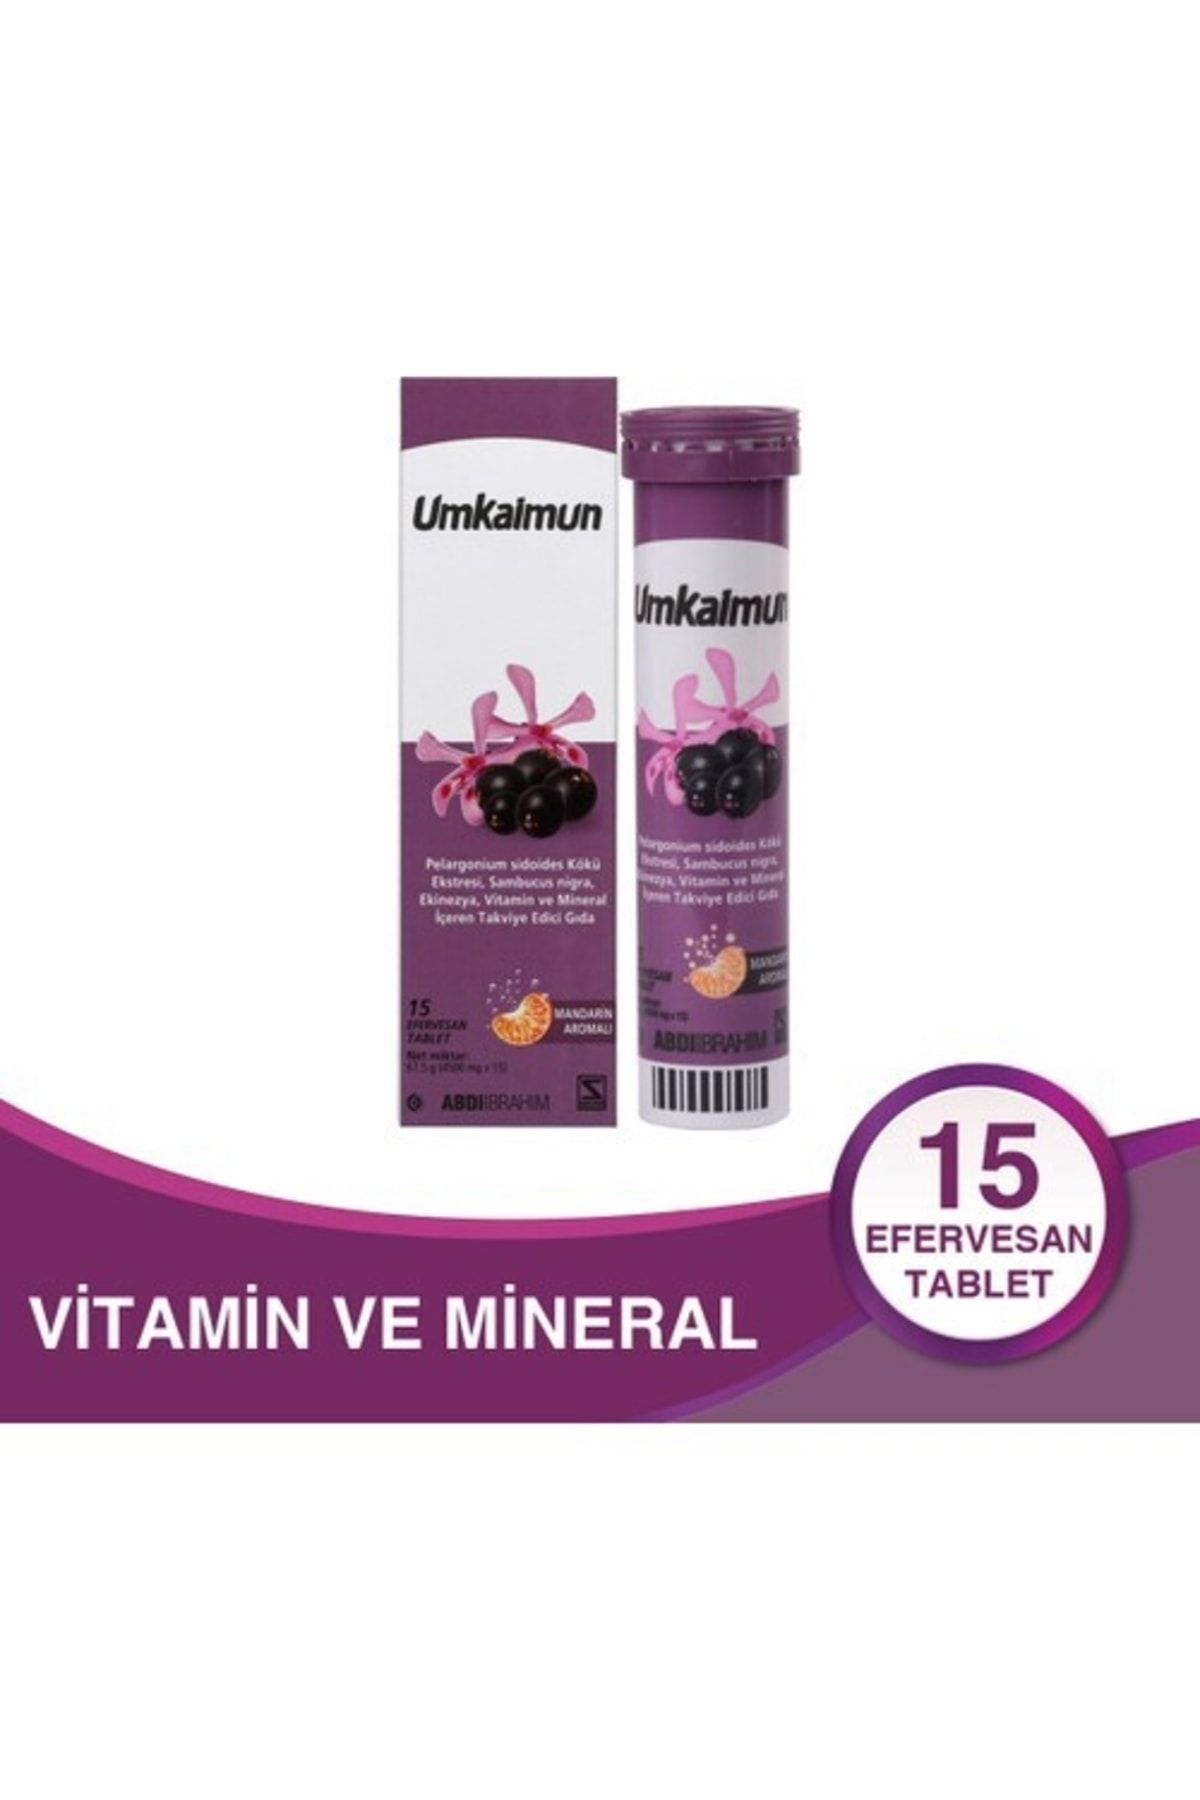 Umkaimun Vitamin Ve Mineral Efervesan 15 Tablet - Abdi Ibrahim